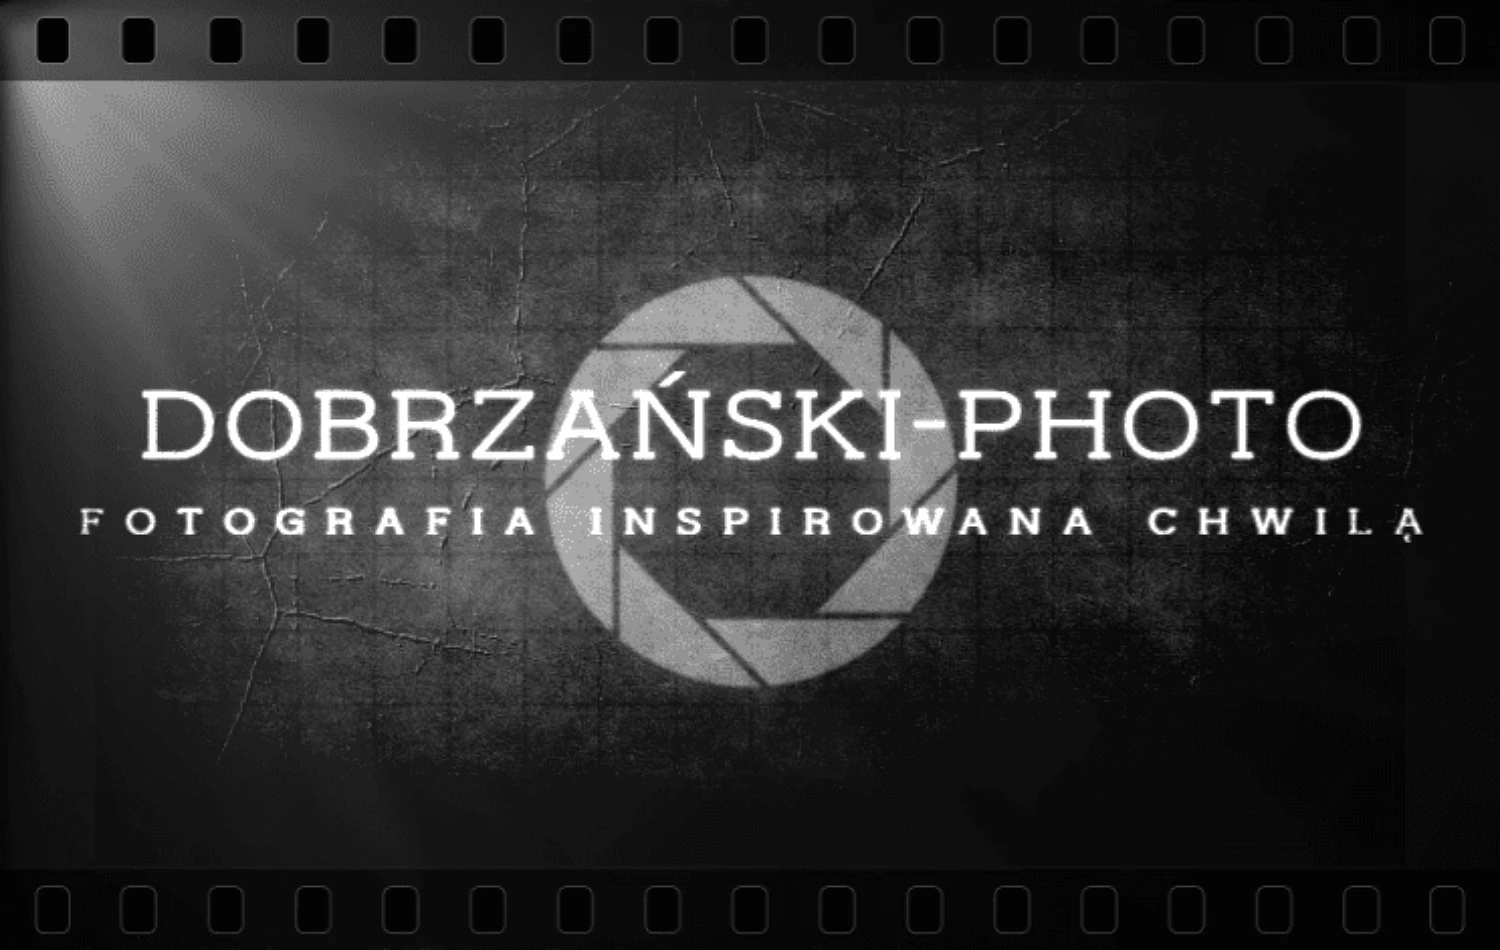 portfolio zdjecia znany fotograf dobrzanskiphoto